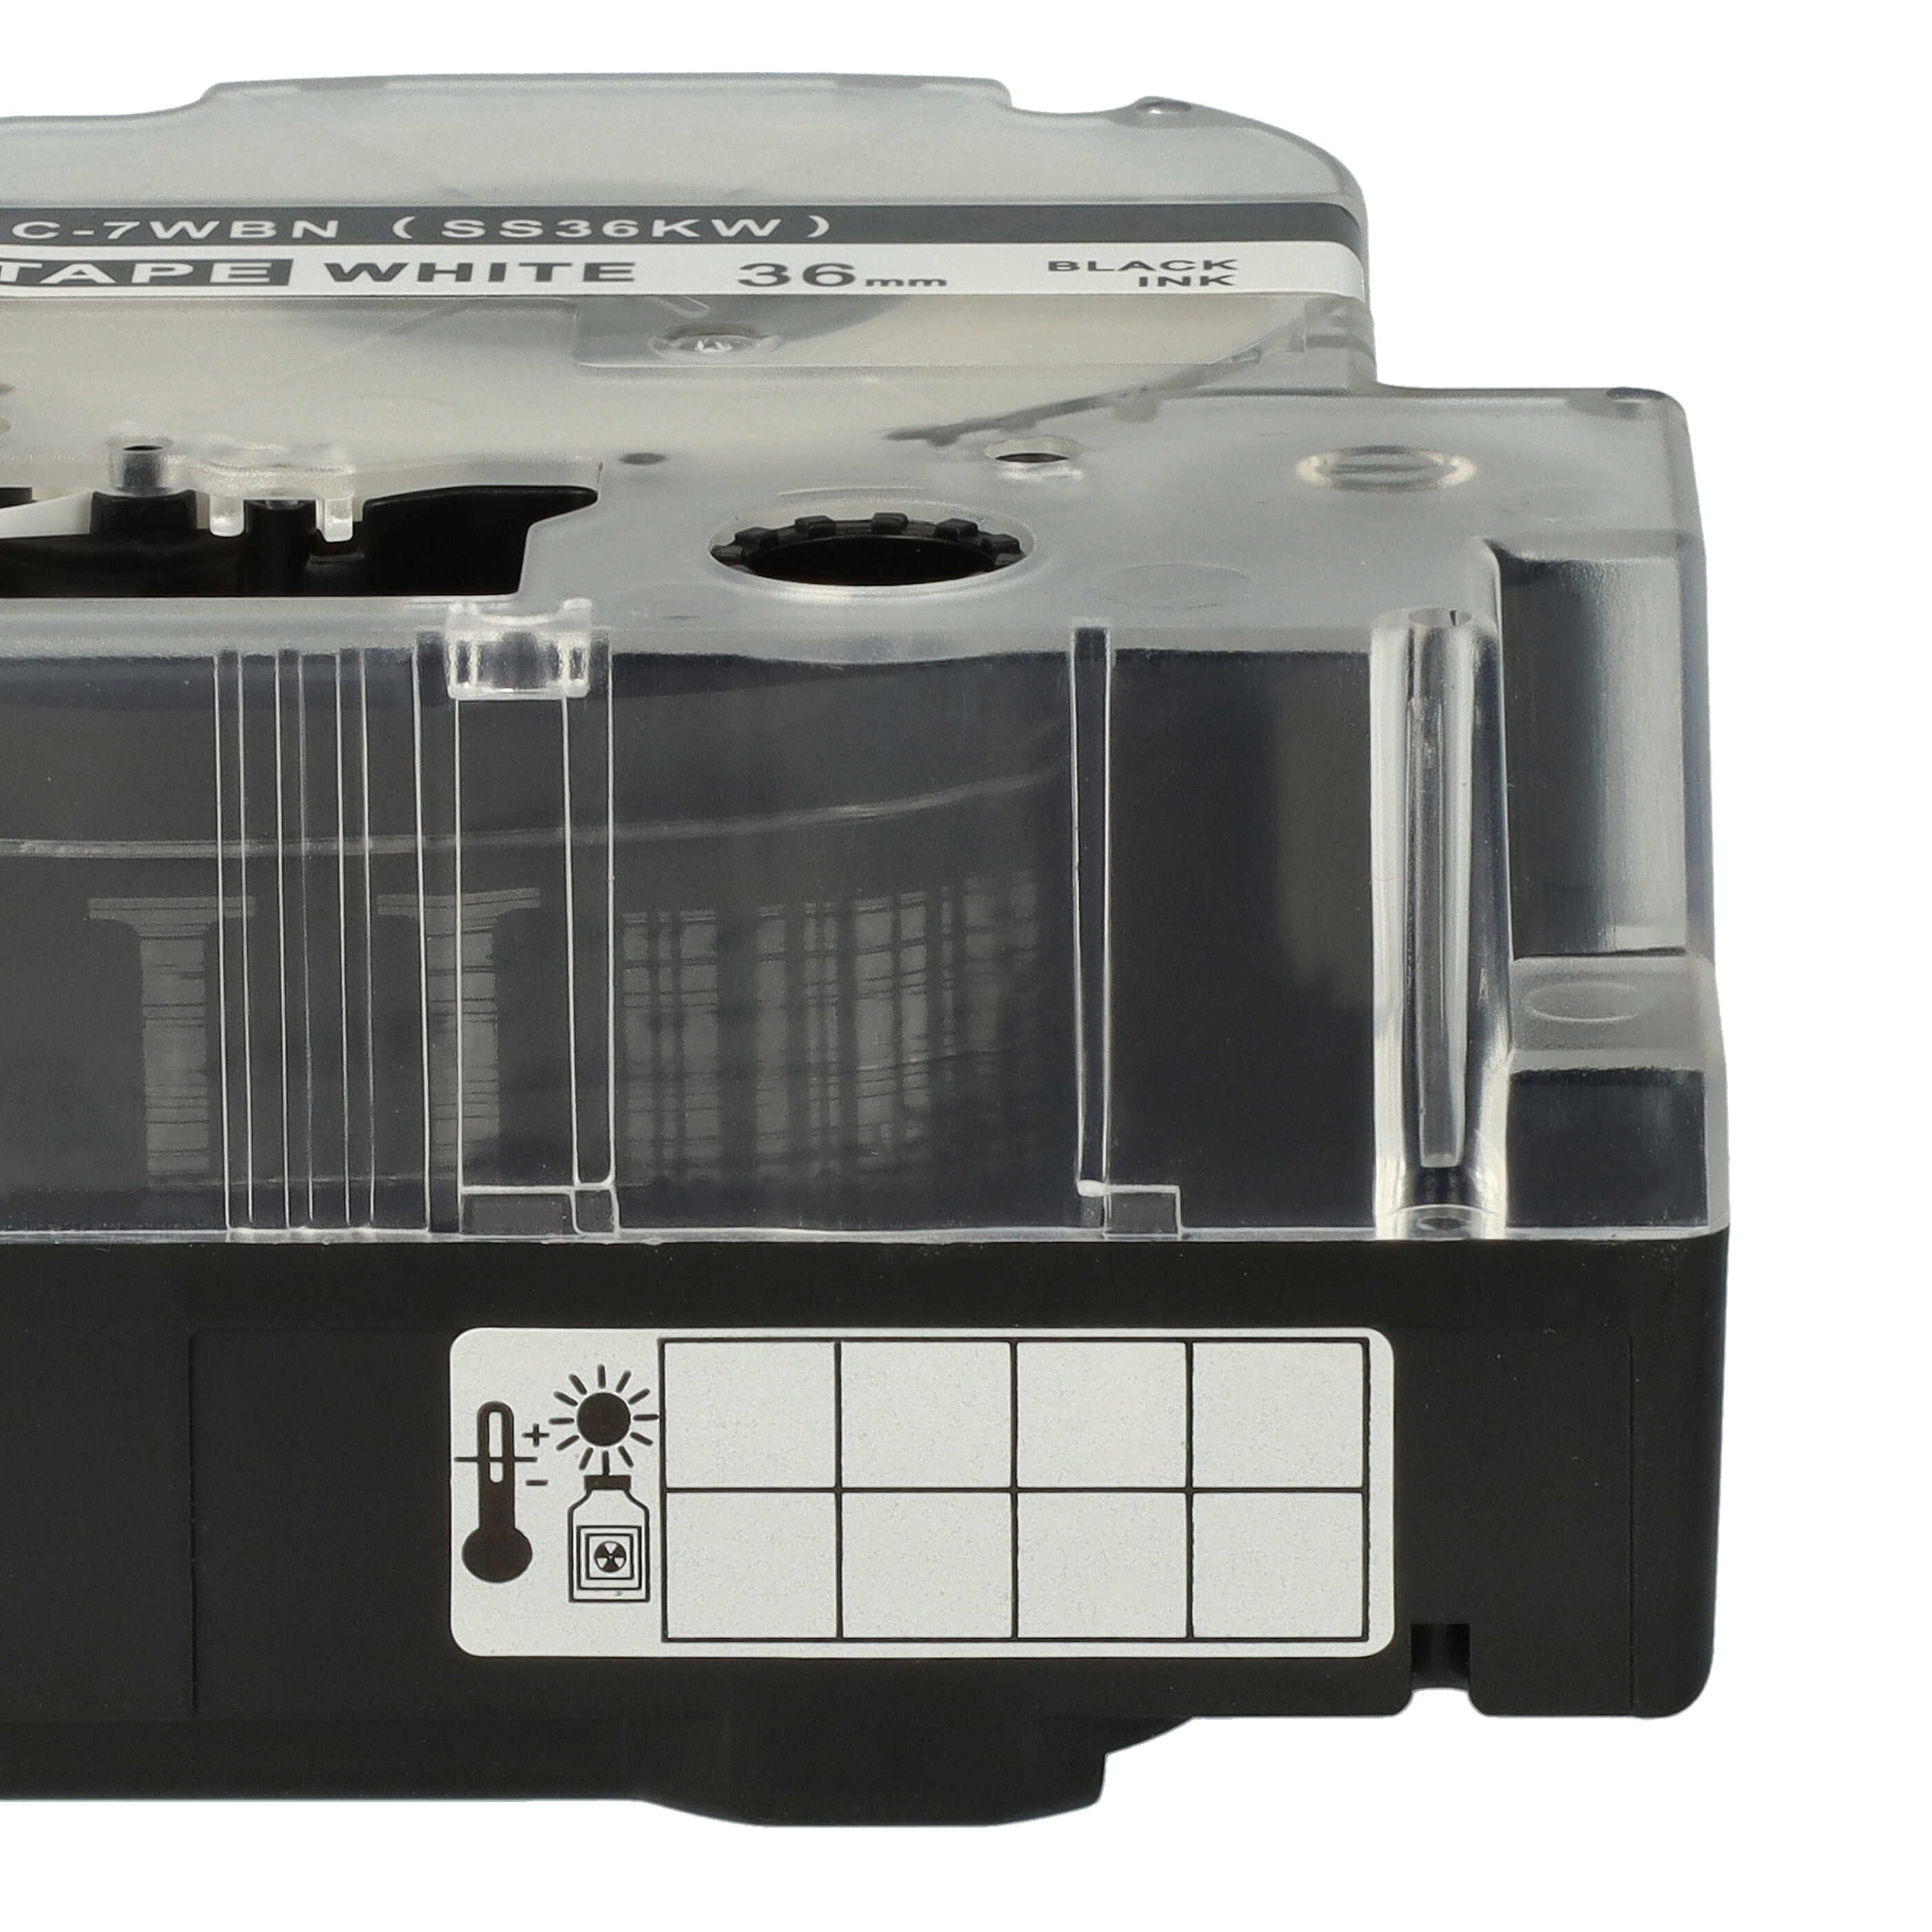 Casete cinta escritura reemplaza Epson LC-7WBN Negro su Blanco